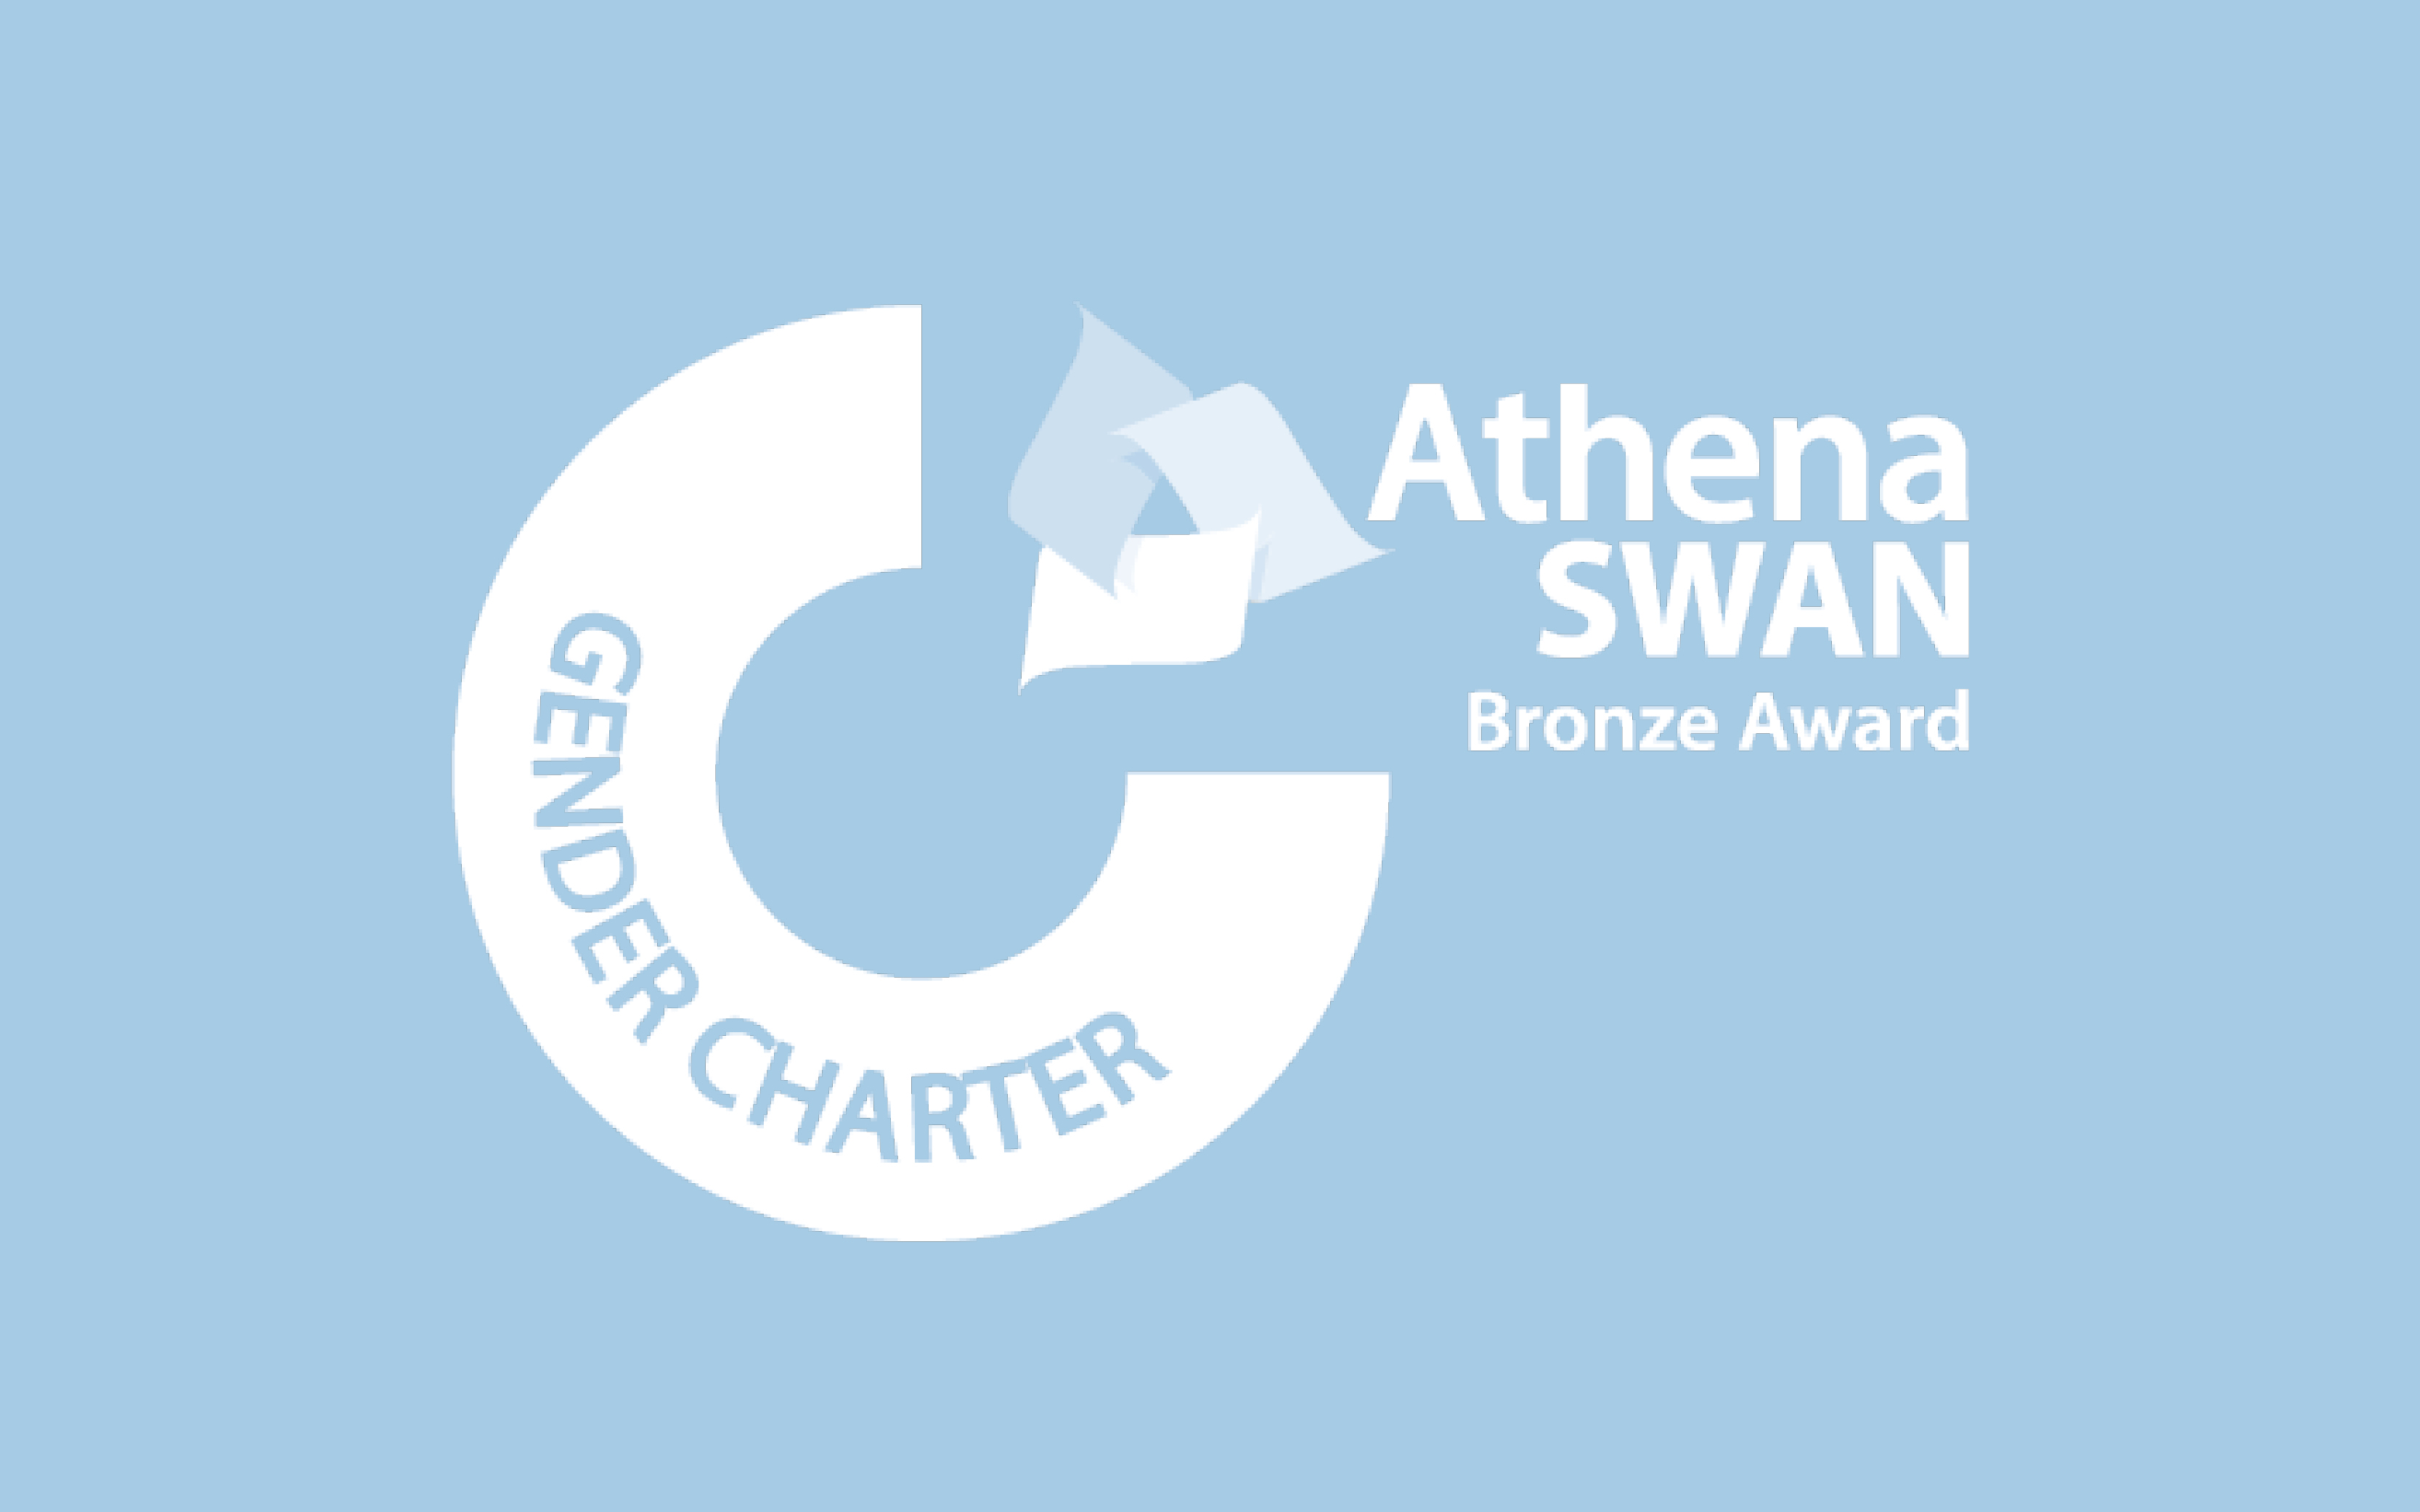 White Athena SWAN logo on blue background